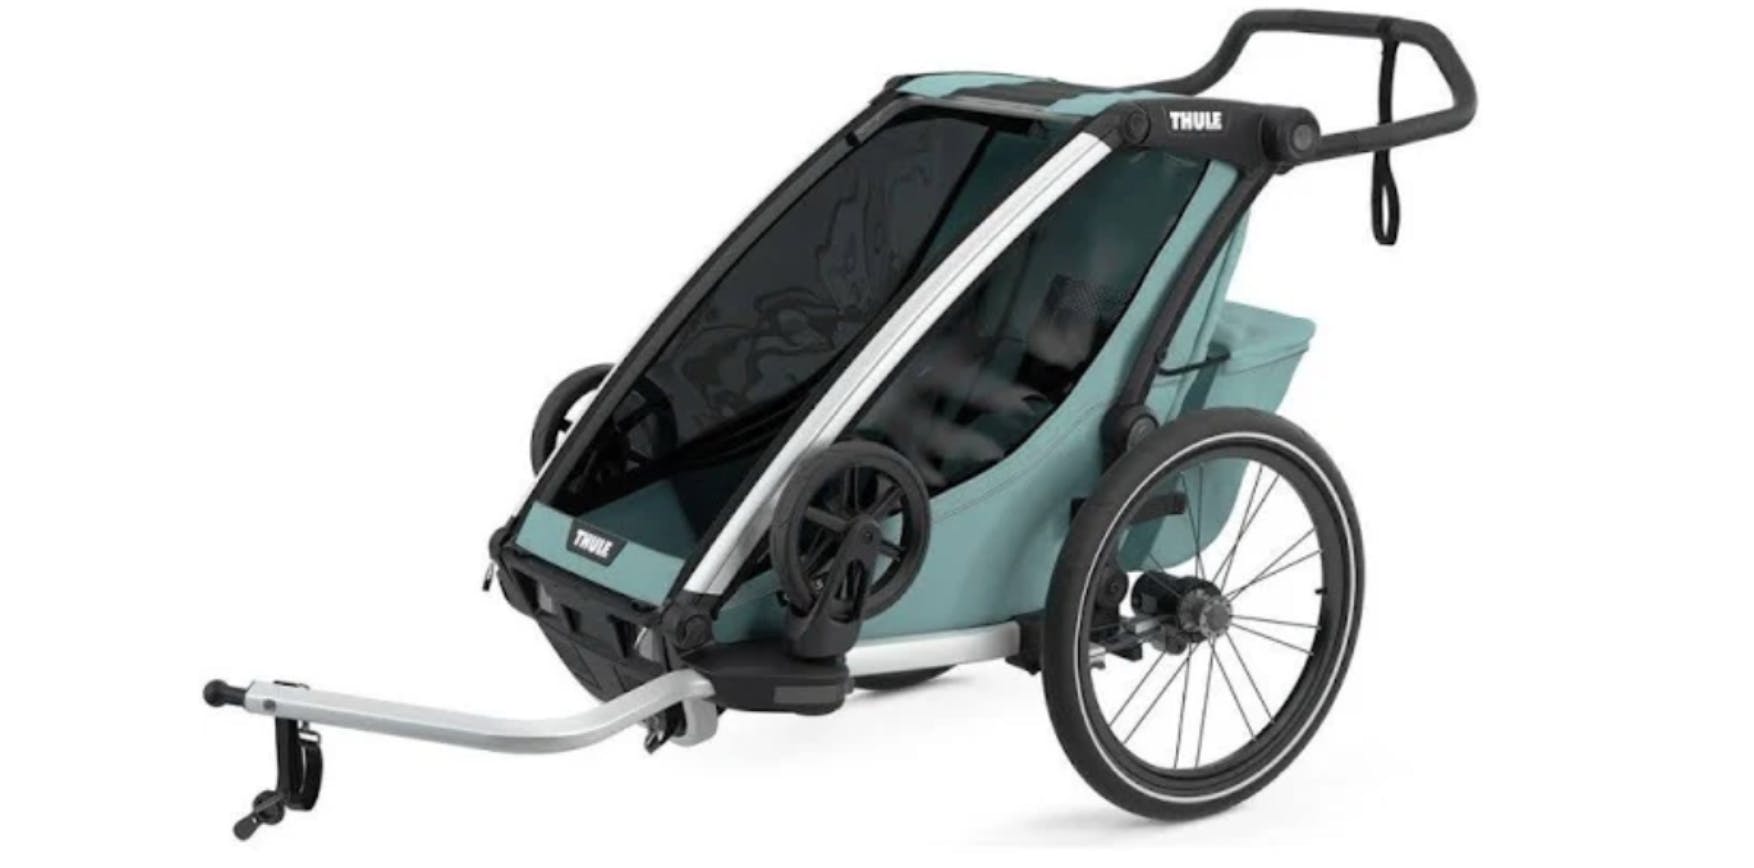 The Thule Chariot Cross Multi-Sport Double Stroller.